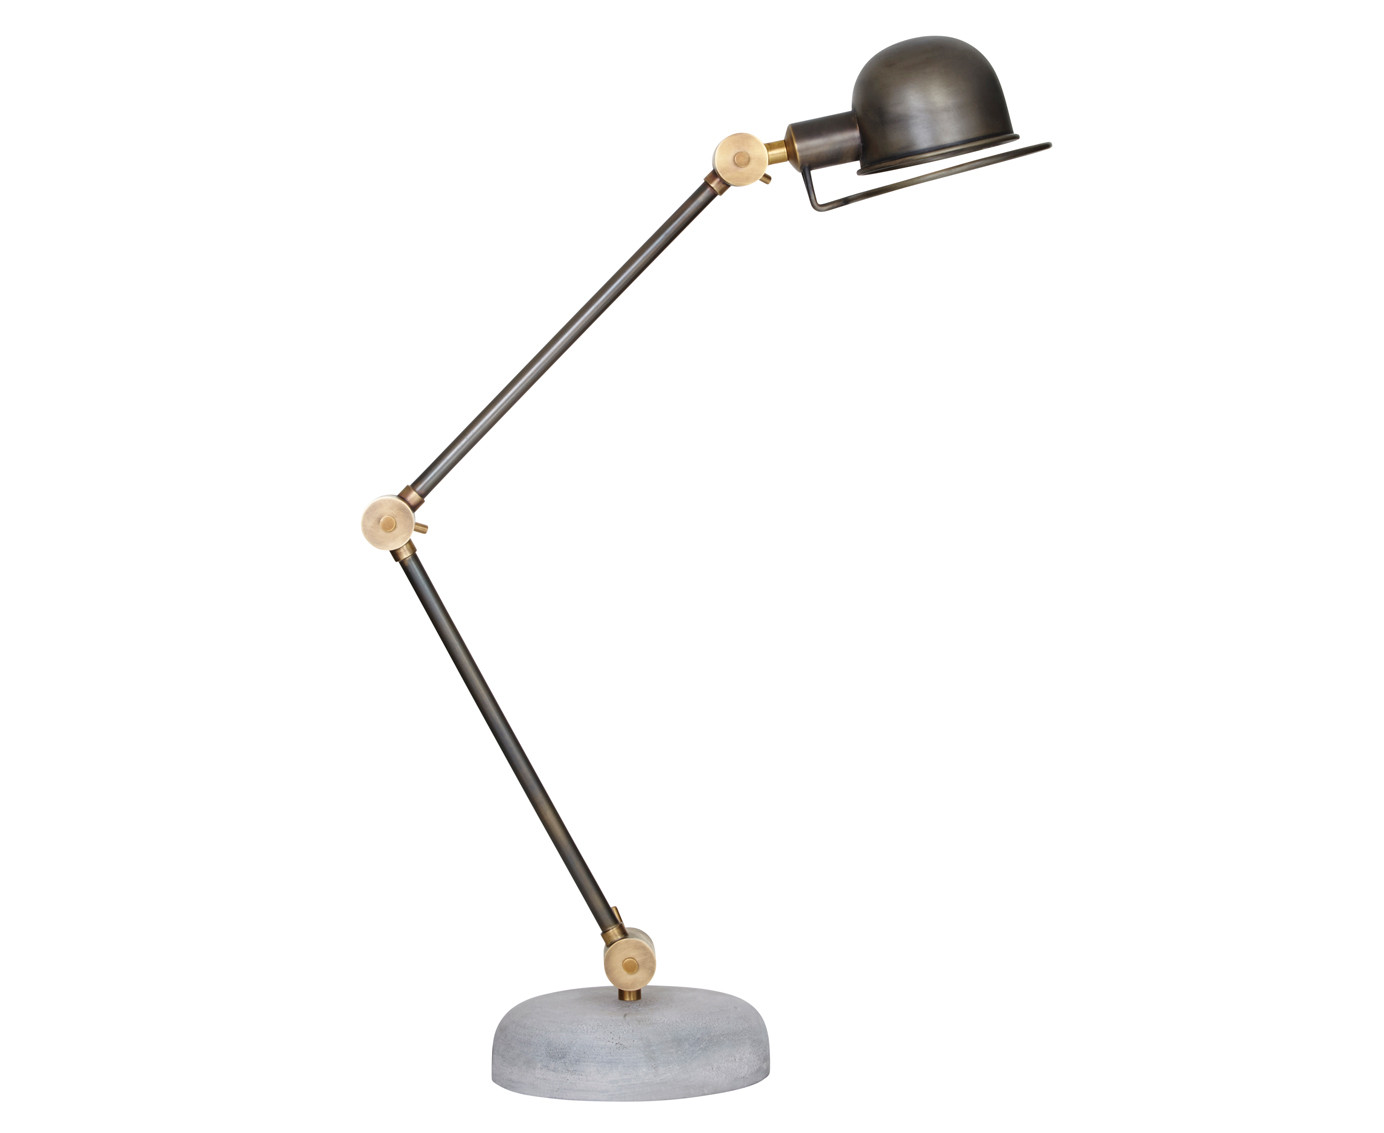 Best ideas about Adjustable Desk Lamp
. Save or Pin Buddy Lamp Vintage Adjustable Bronze Desk Lamp Loaf Now.